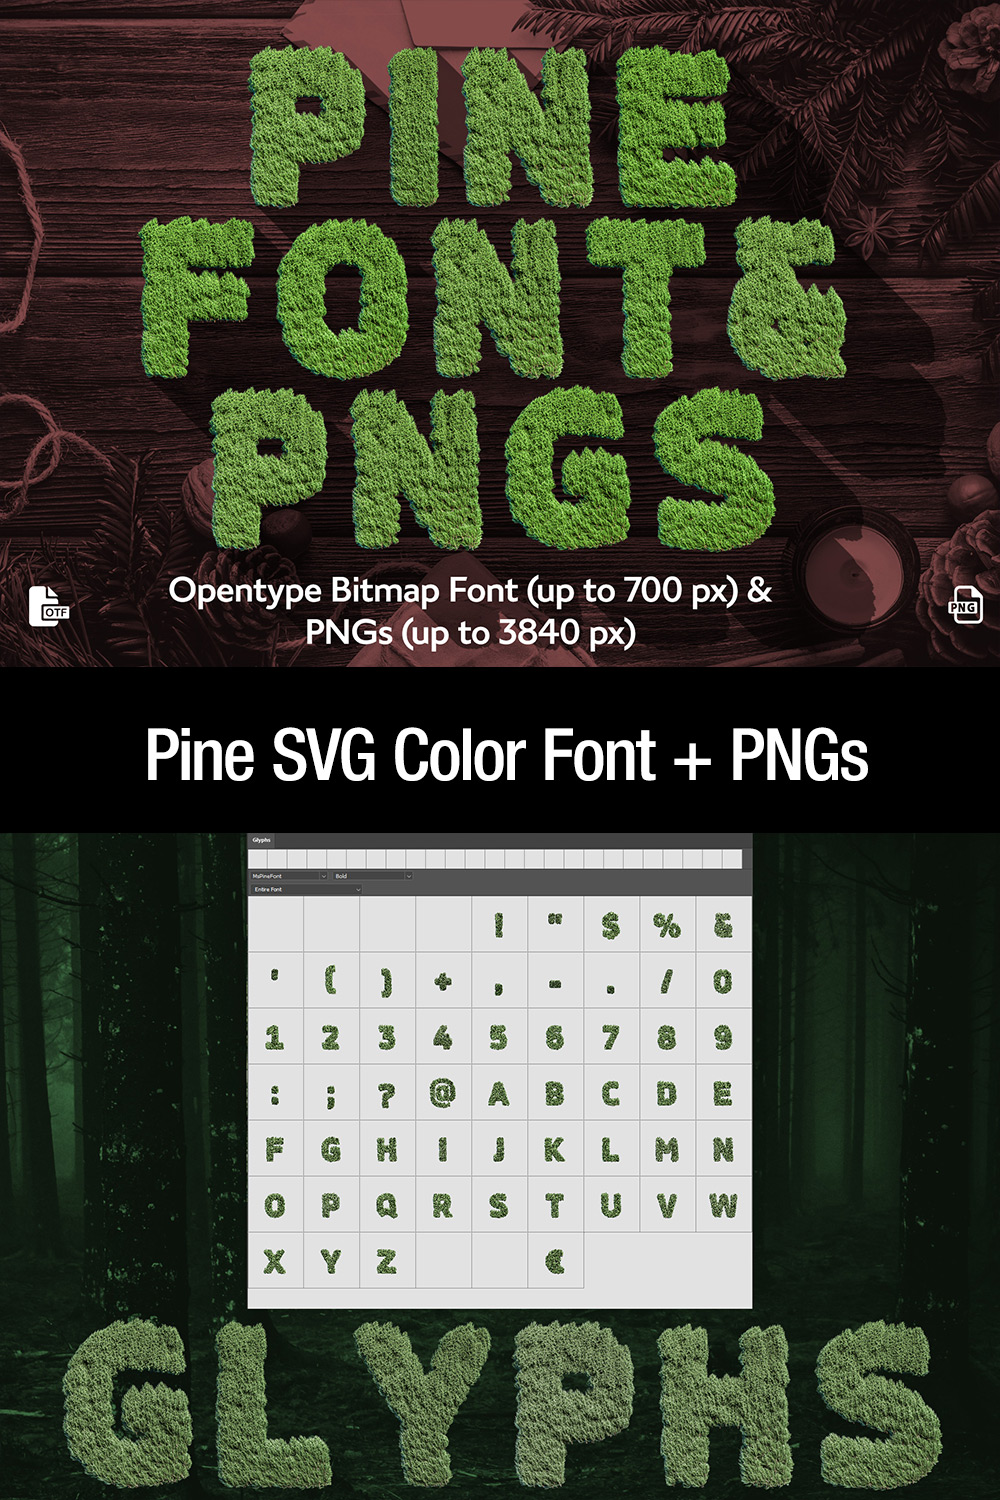 MS Pine Bitmap Font and PNG Design pinterest image.